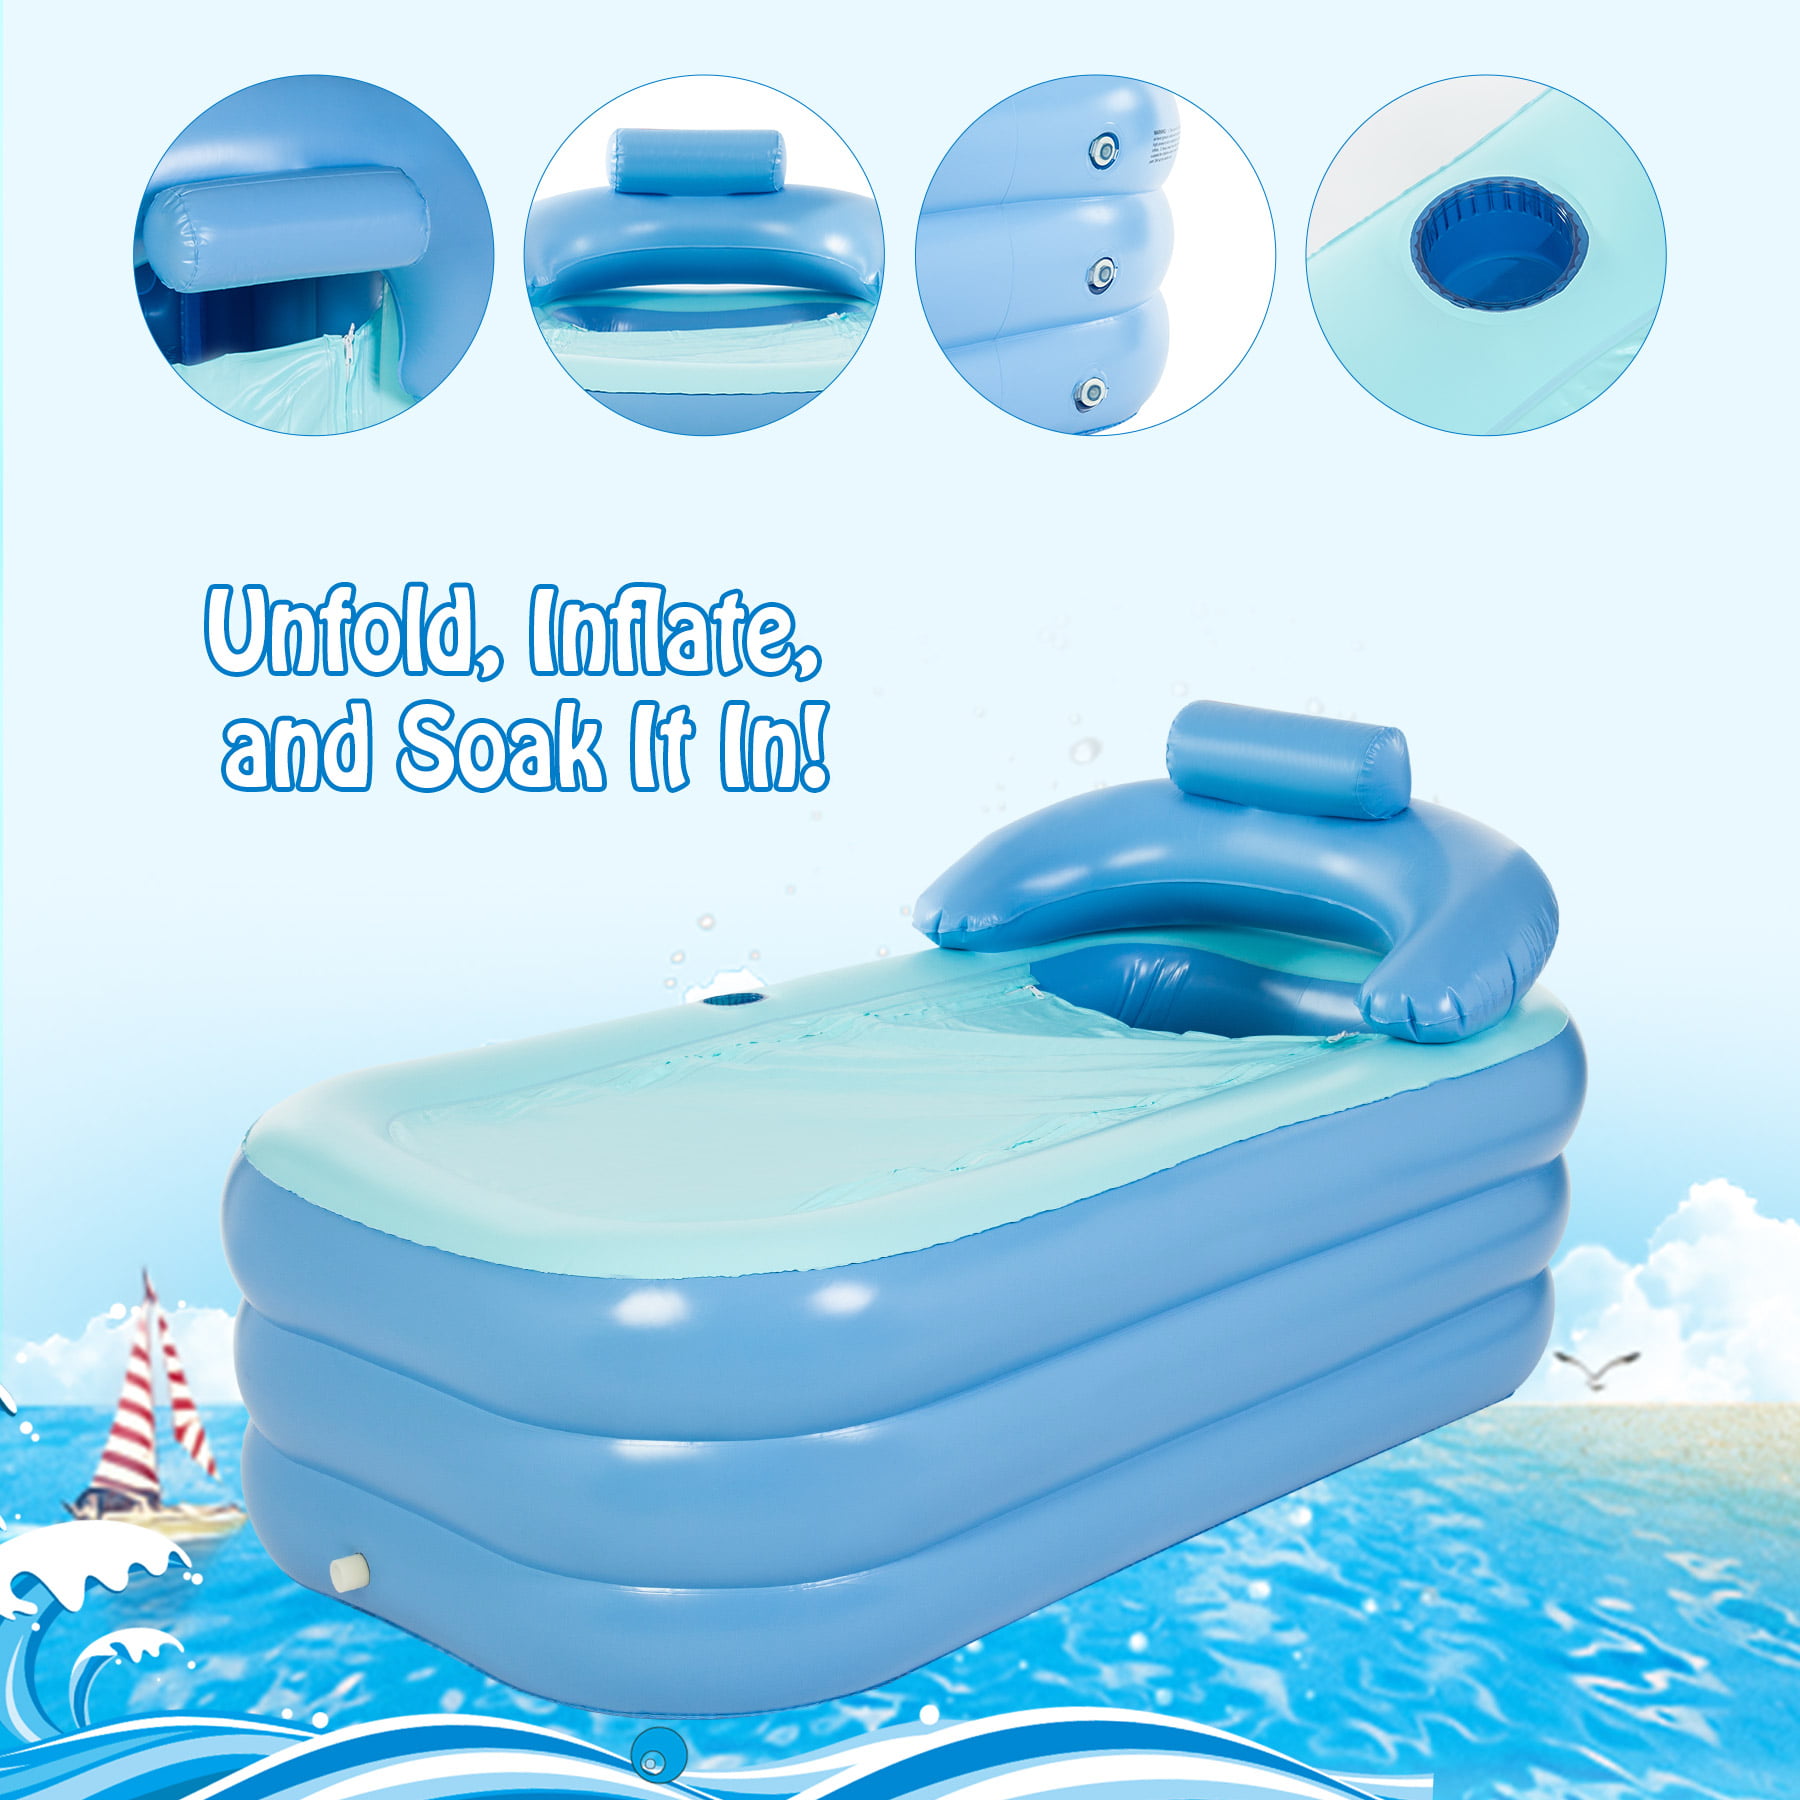 155 115 *60 AXWT Double Bathtub Inflatable Plastic Inflatable Swimming Pool Foldable Tub,thickened Large Size Tub For Adult,Bathtub Inflatable PVC,Inflatable Bathtub Home Adult Couple Bath Barrel 